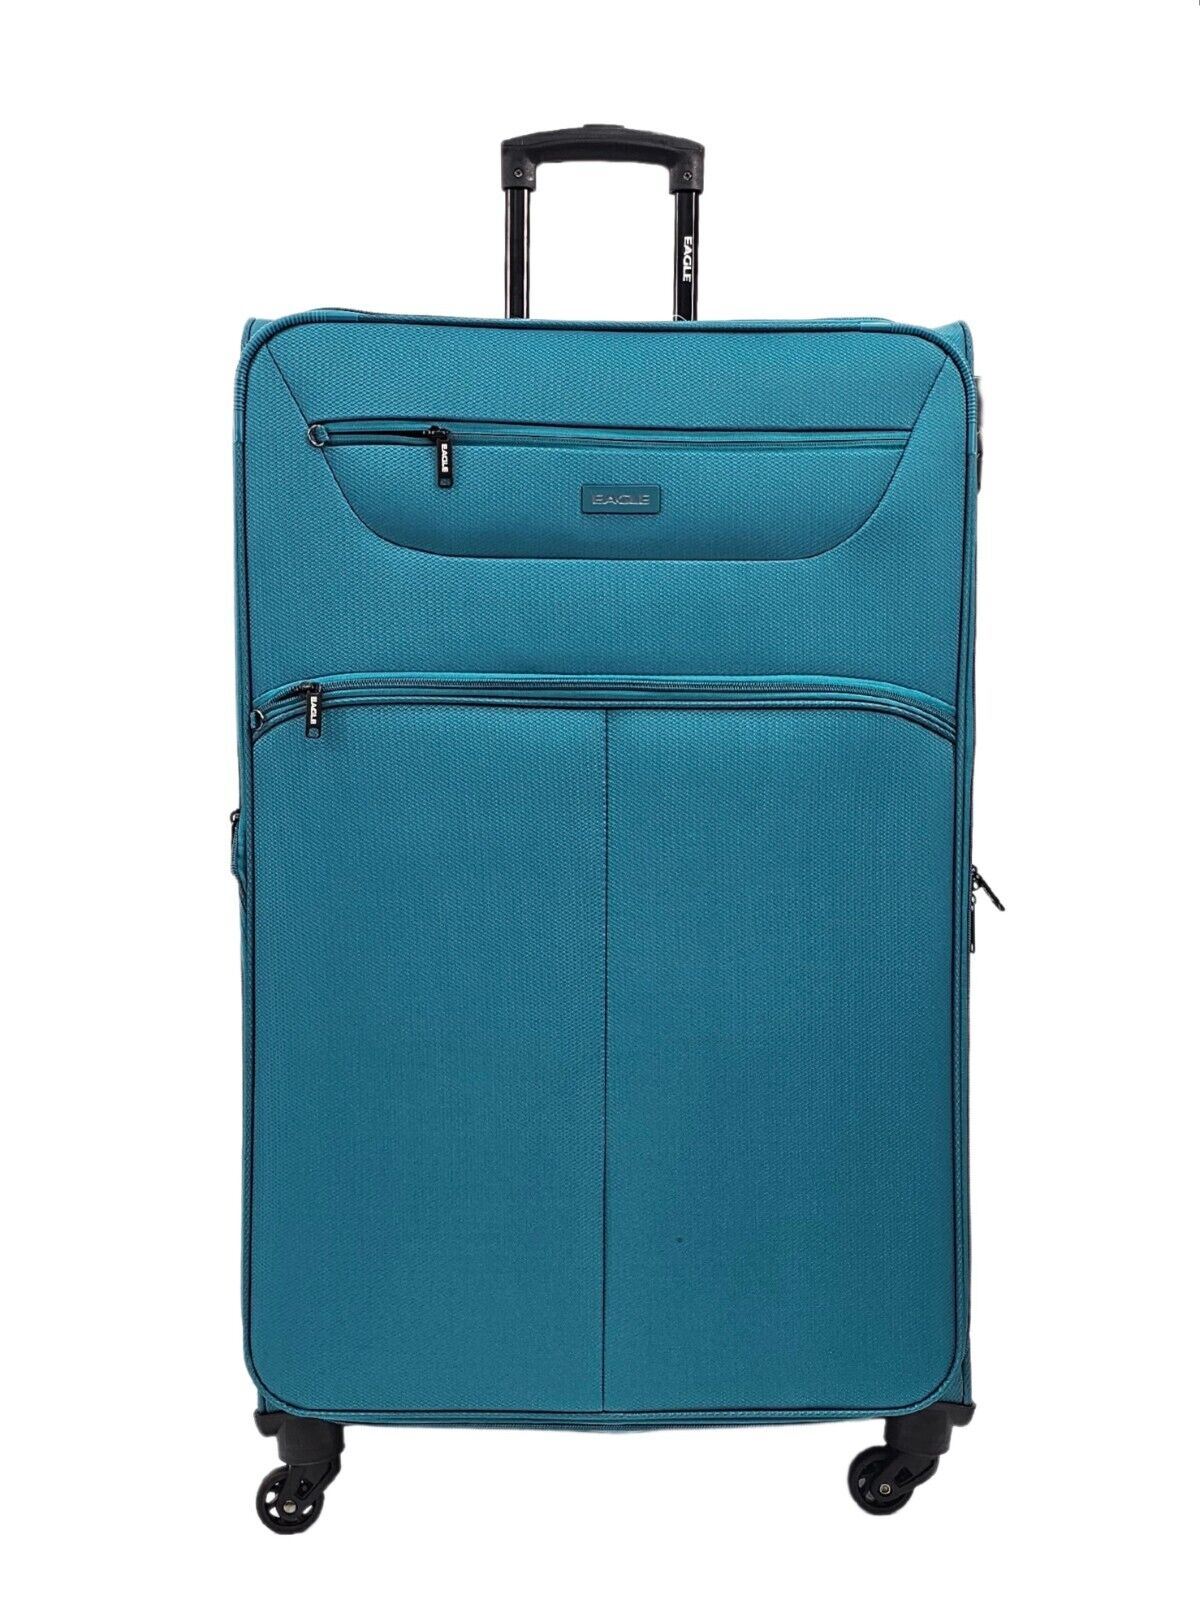 Lightweight Soft Teal Blue Suitcases Set 4 Wheel Luggage Travel TSA Cabin - Upperclass Fashions 